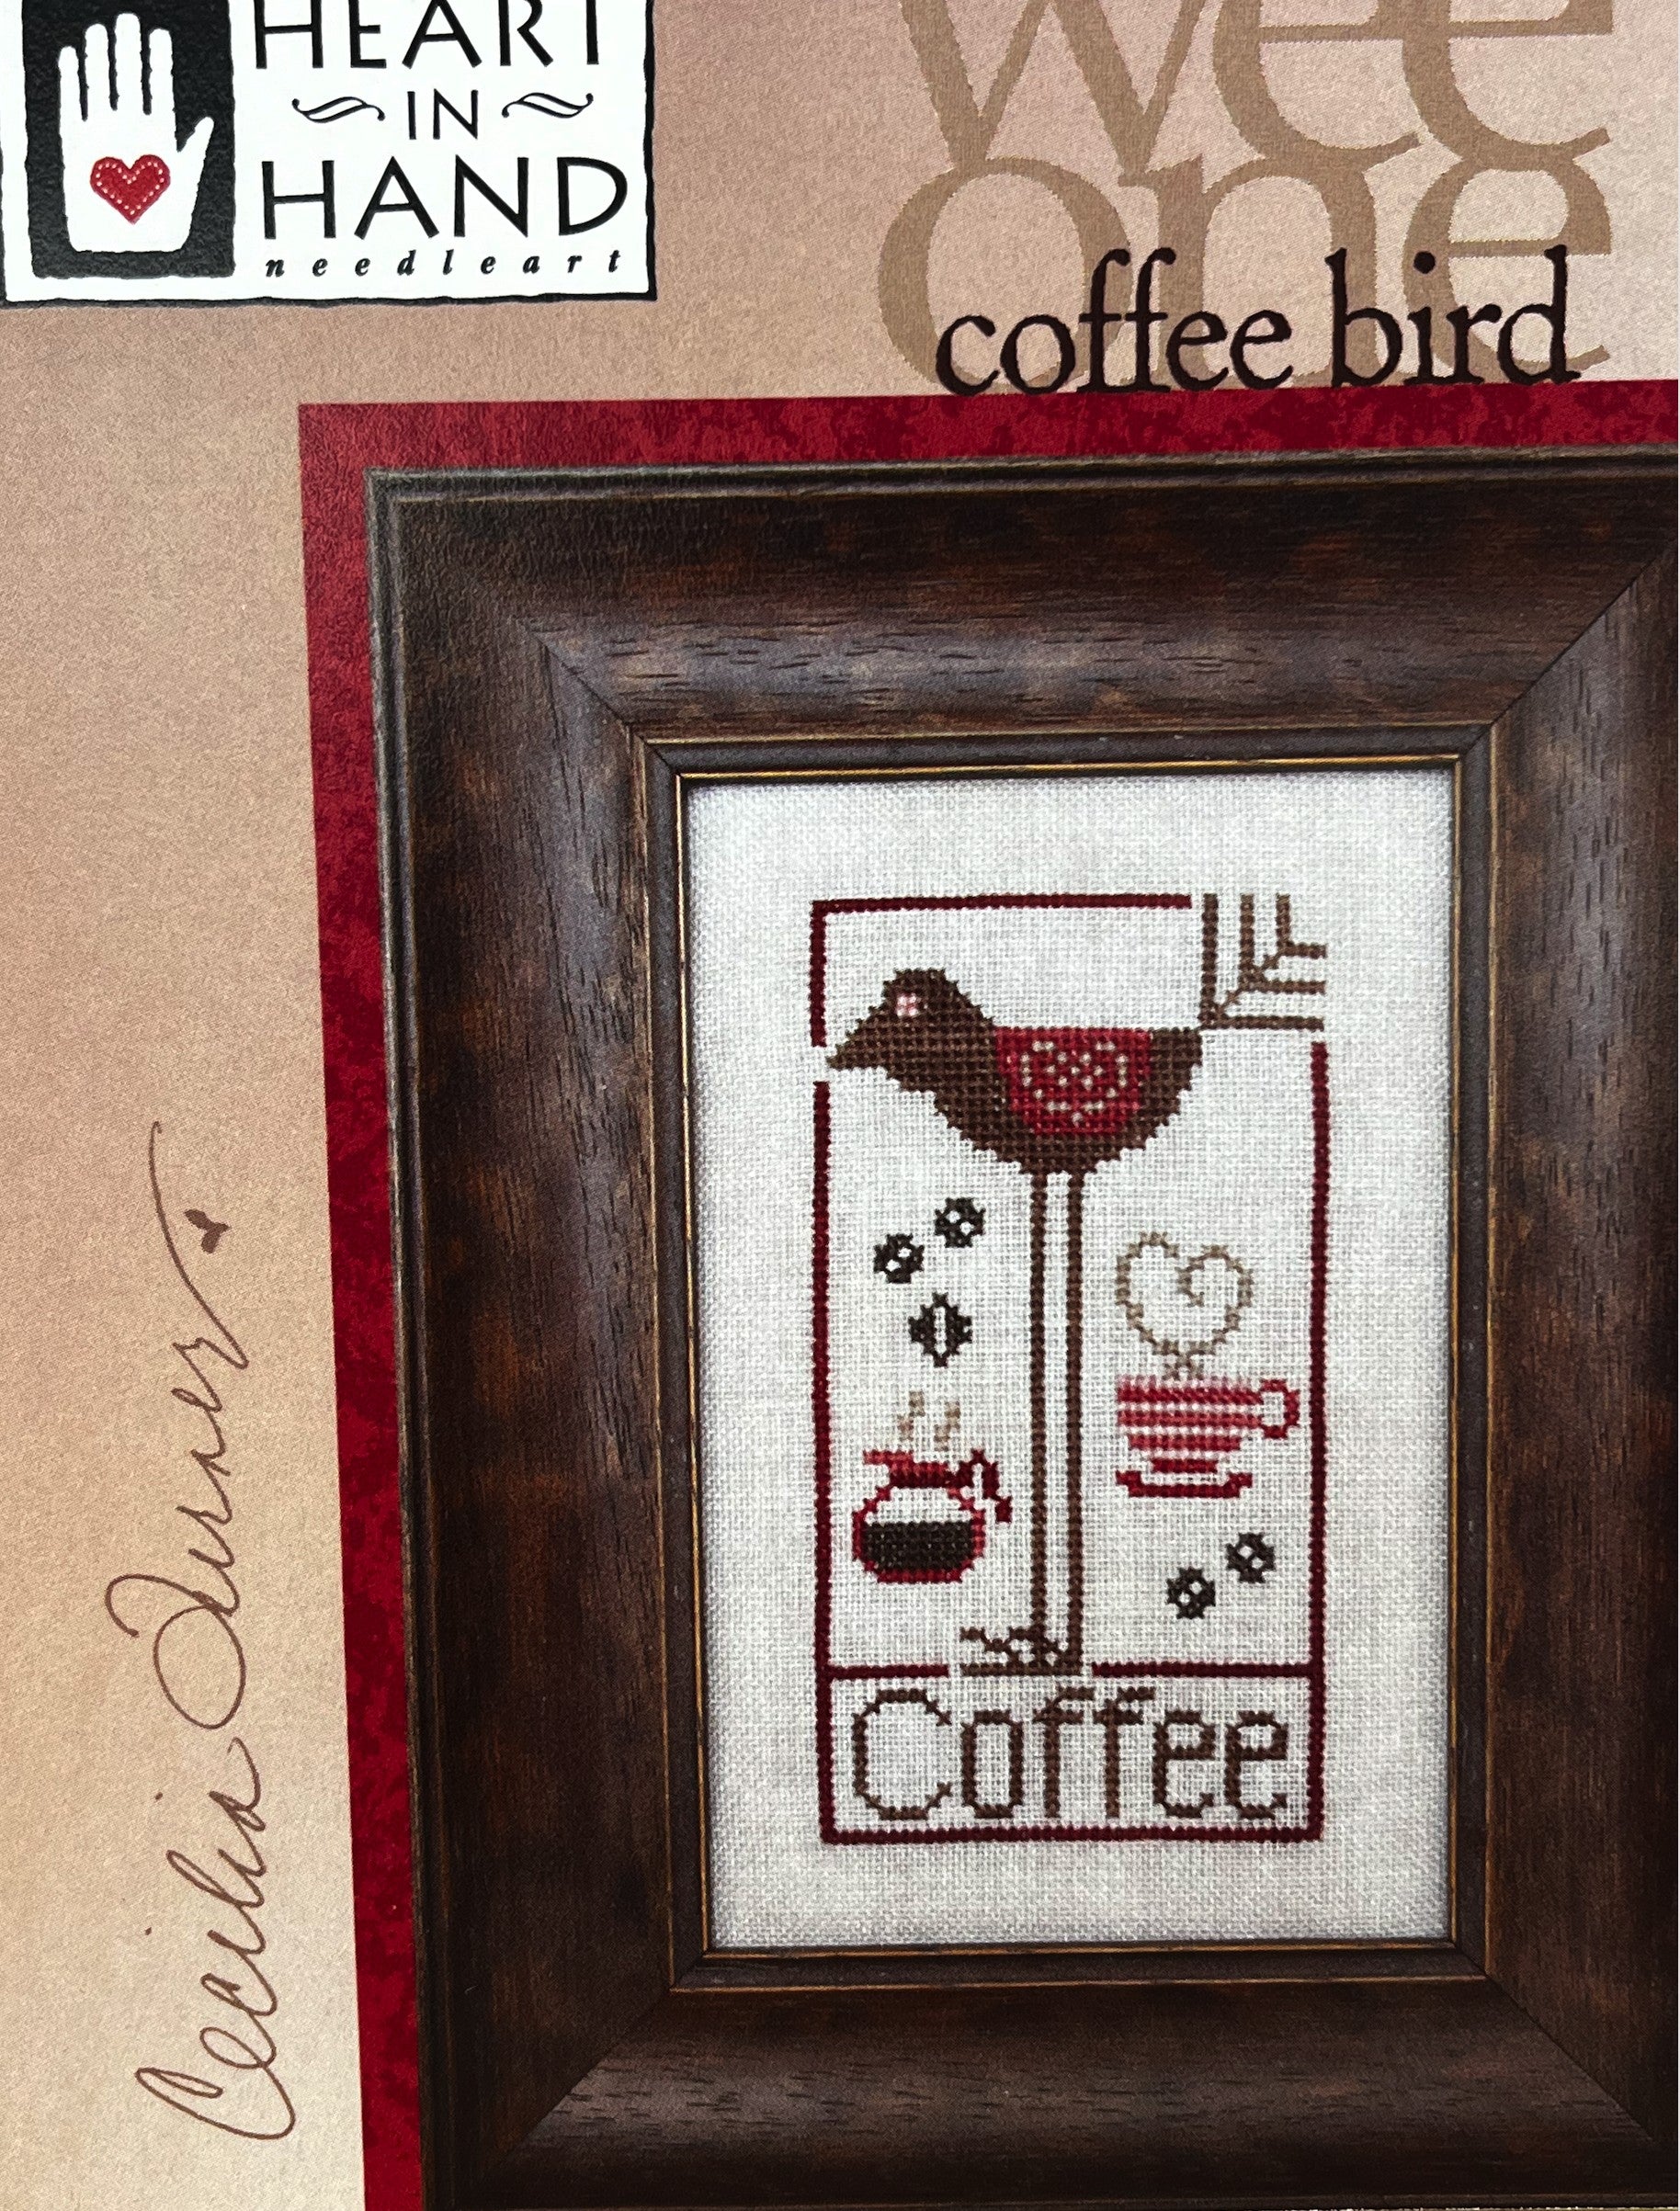 Coffee Bird by Heart in Hand Heart in Hand